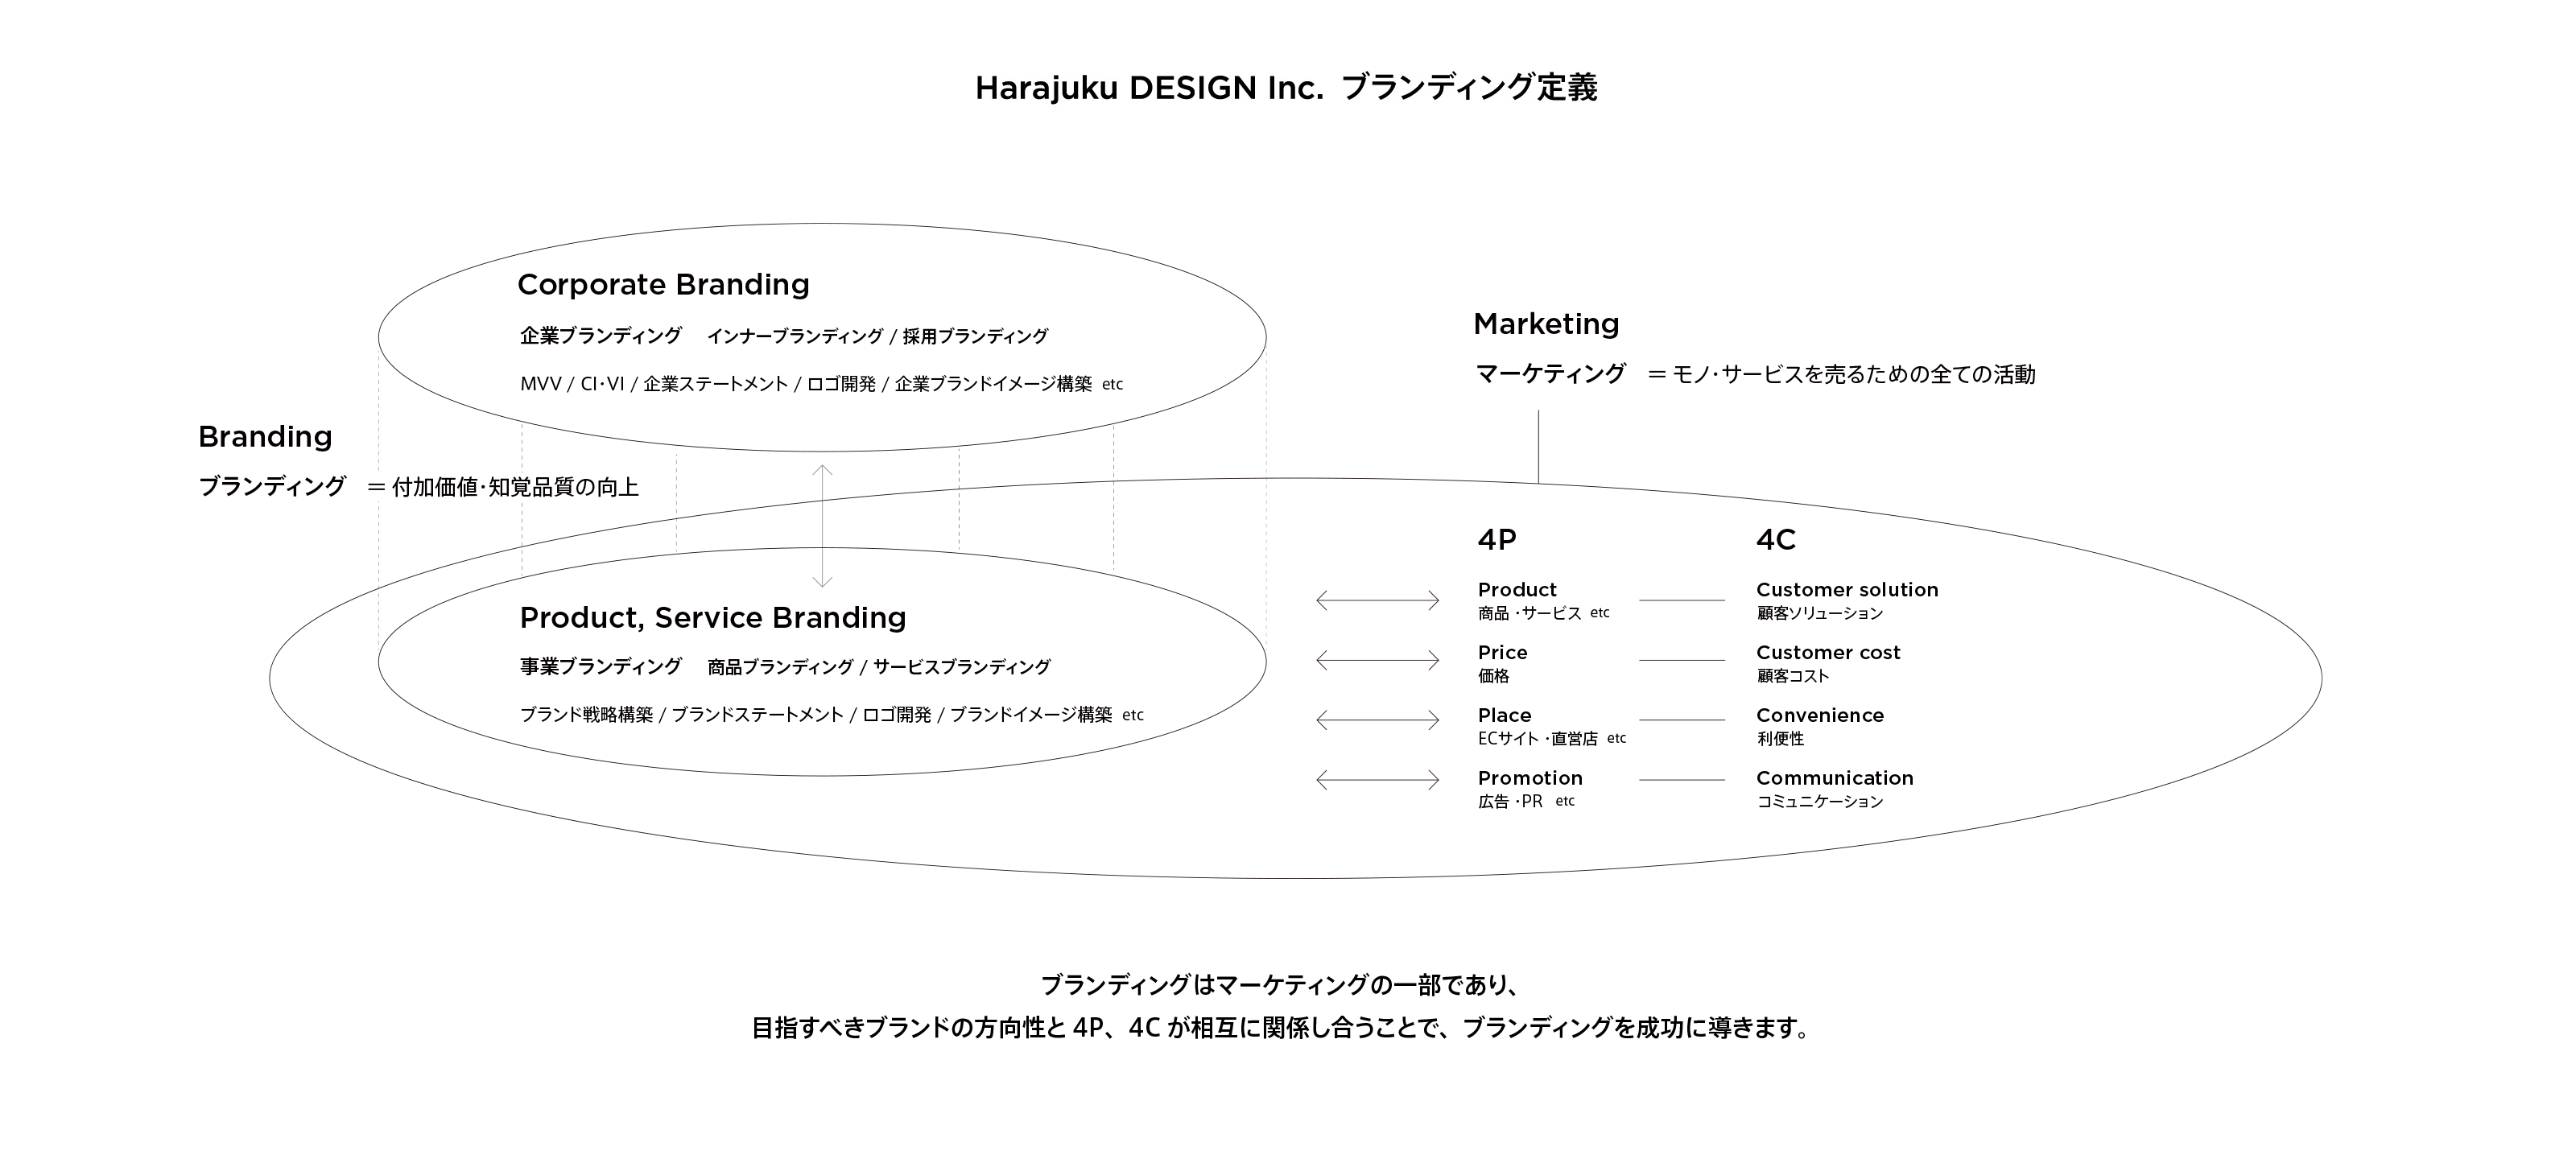 Harajuku DESIGN Inc. が考えるブランディング